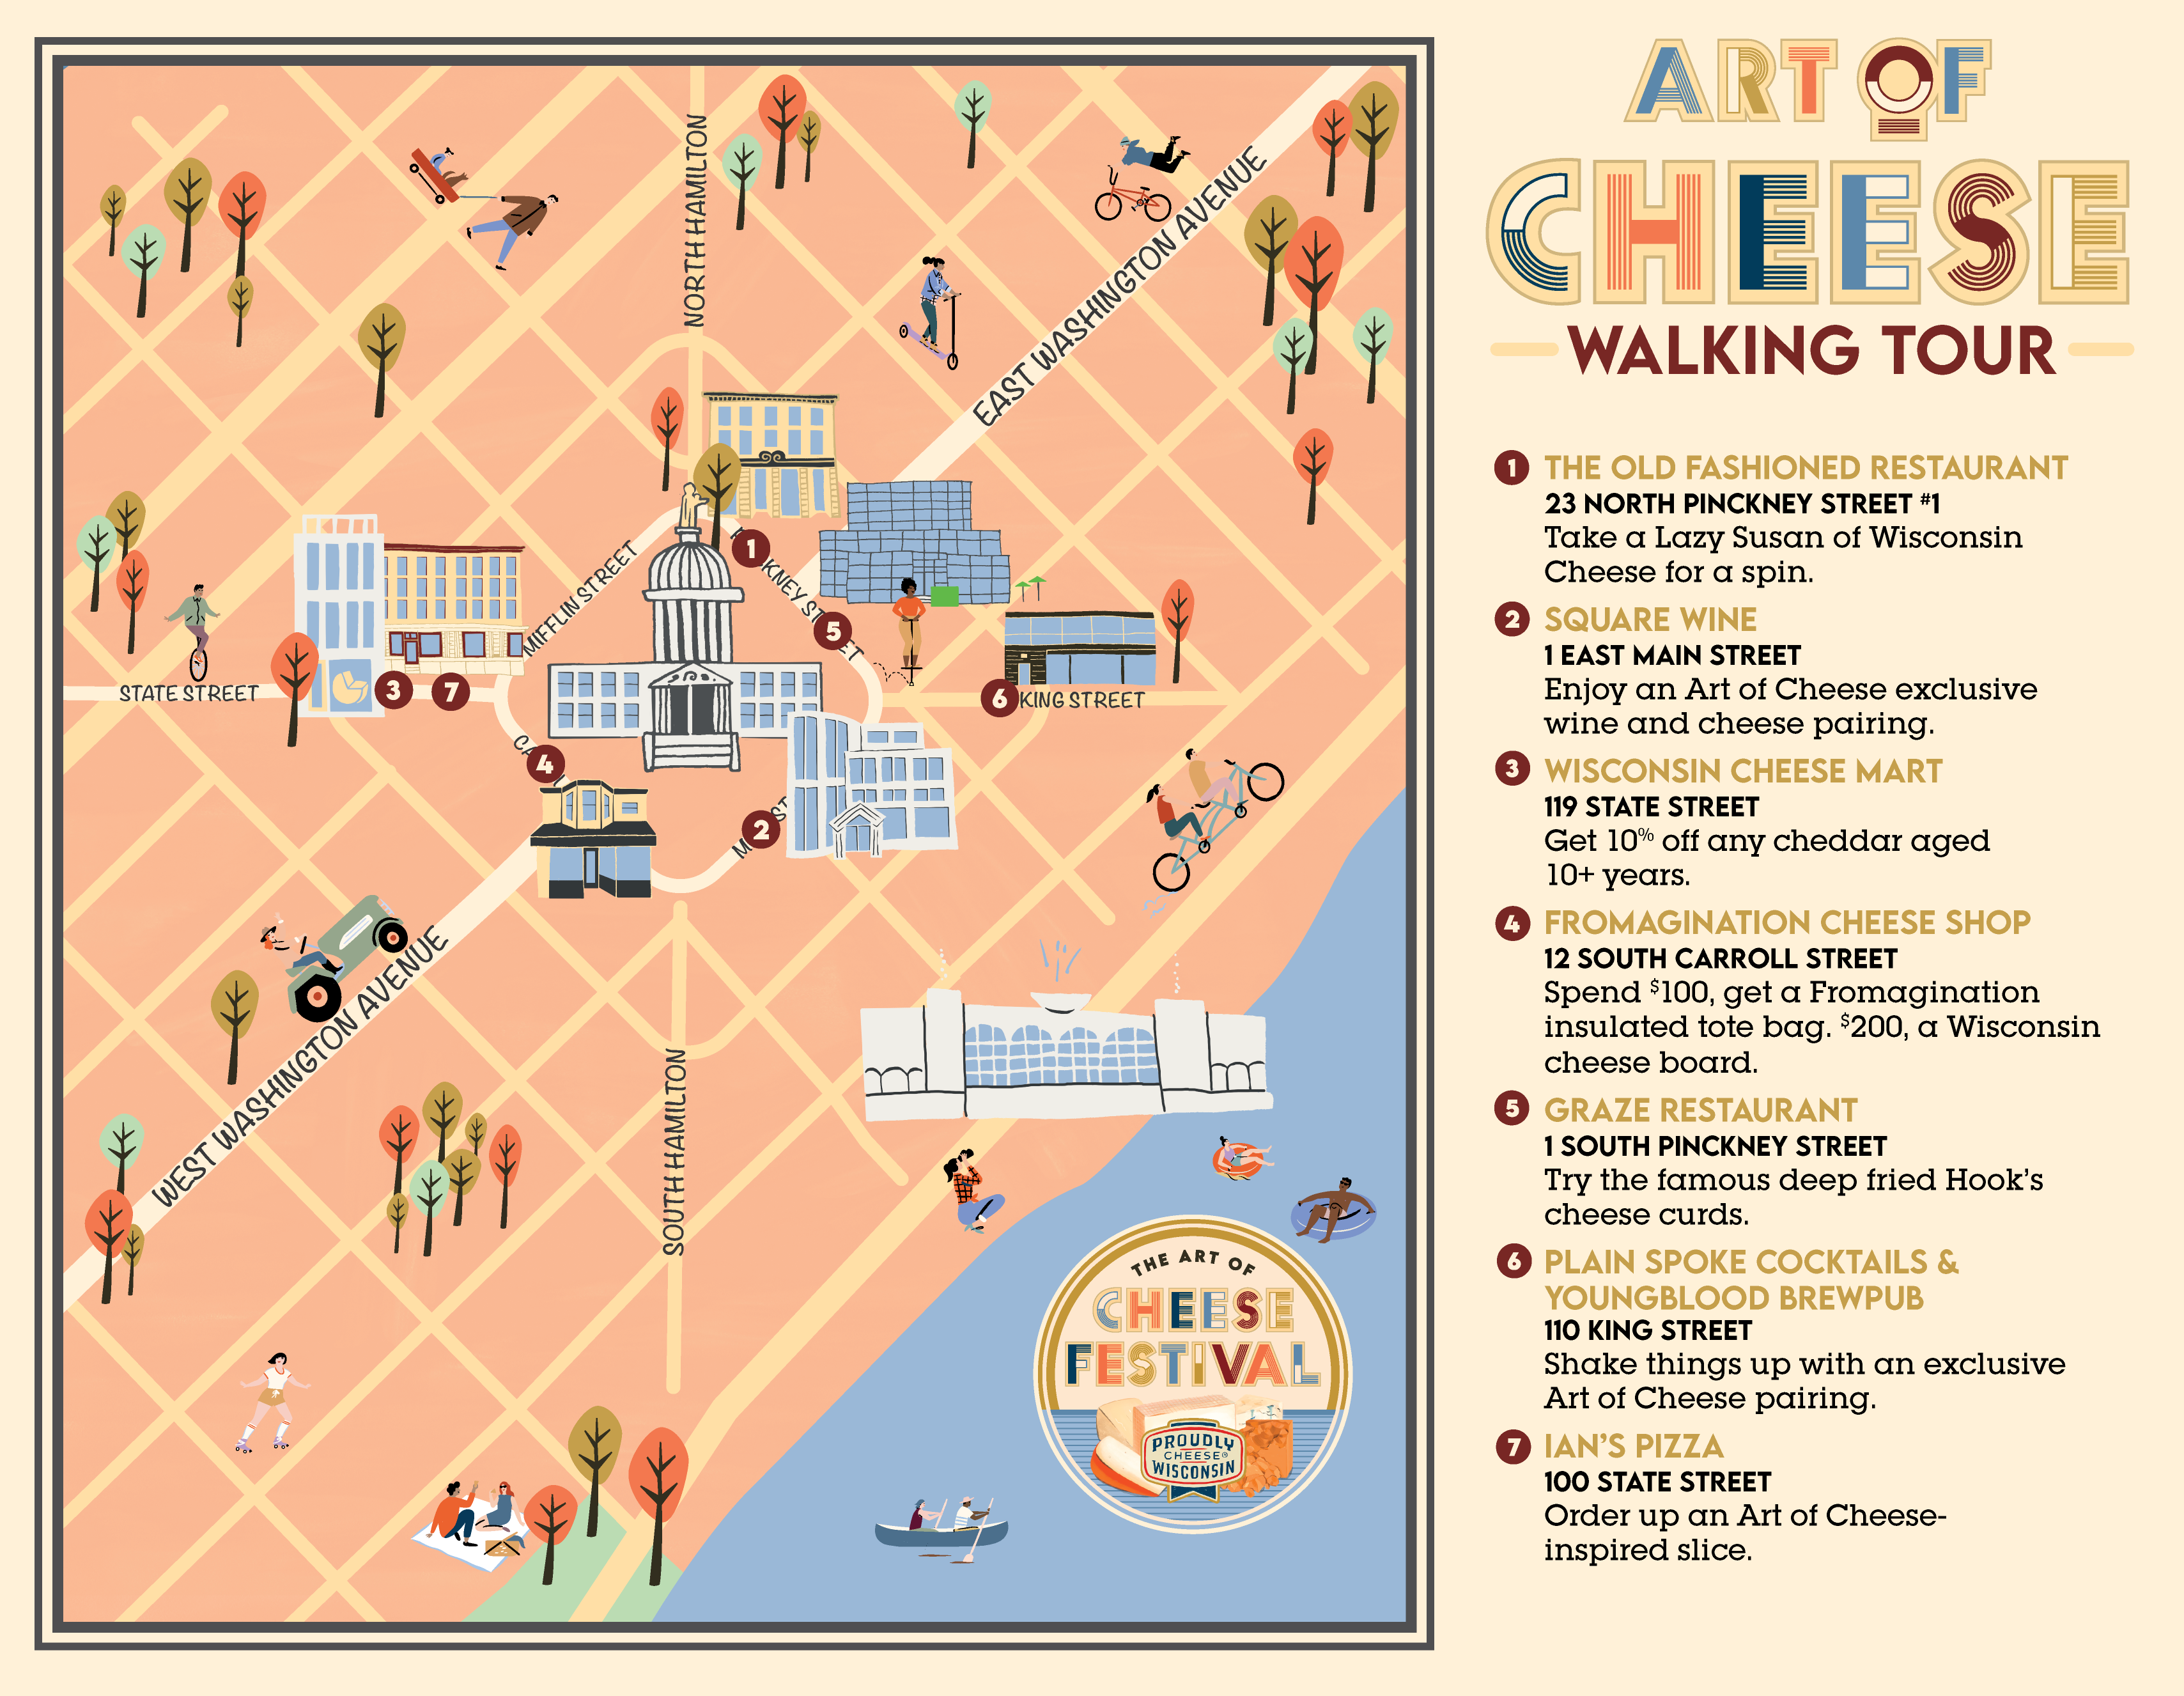 Walking Map of Art of Cheese Festival Restaurants